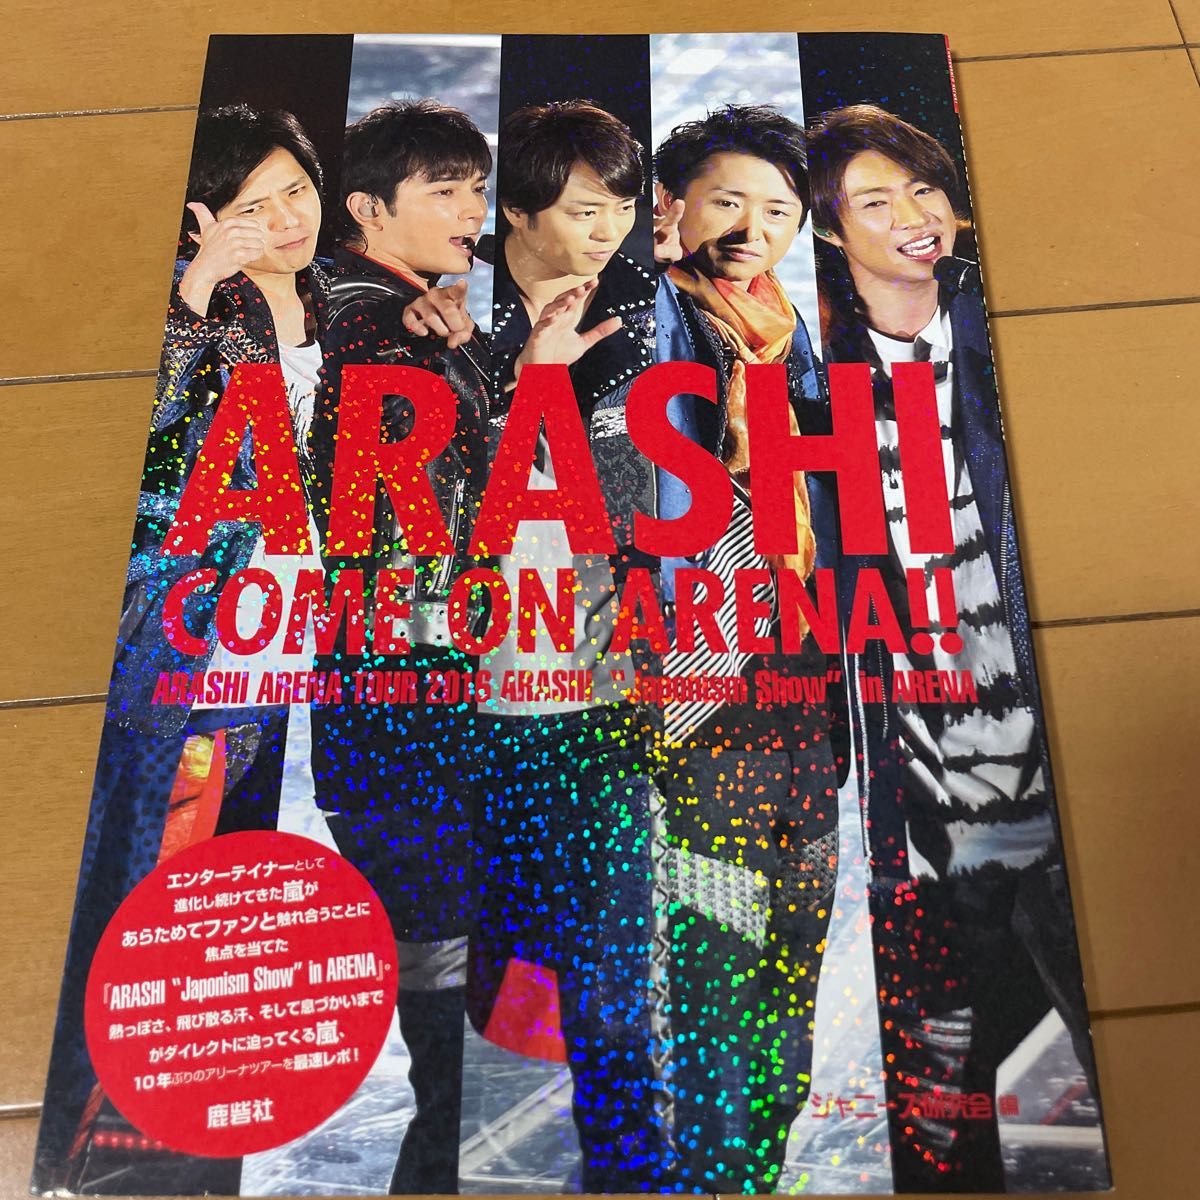 ARASHI COME ON ARENA!!  ARASHI ARENA TOUR 2016  "Japonism Show" 